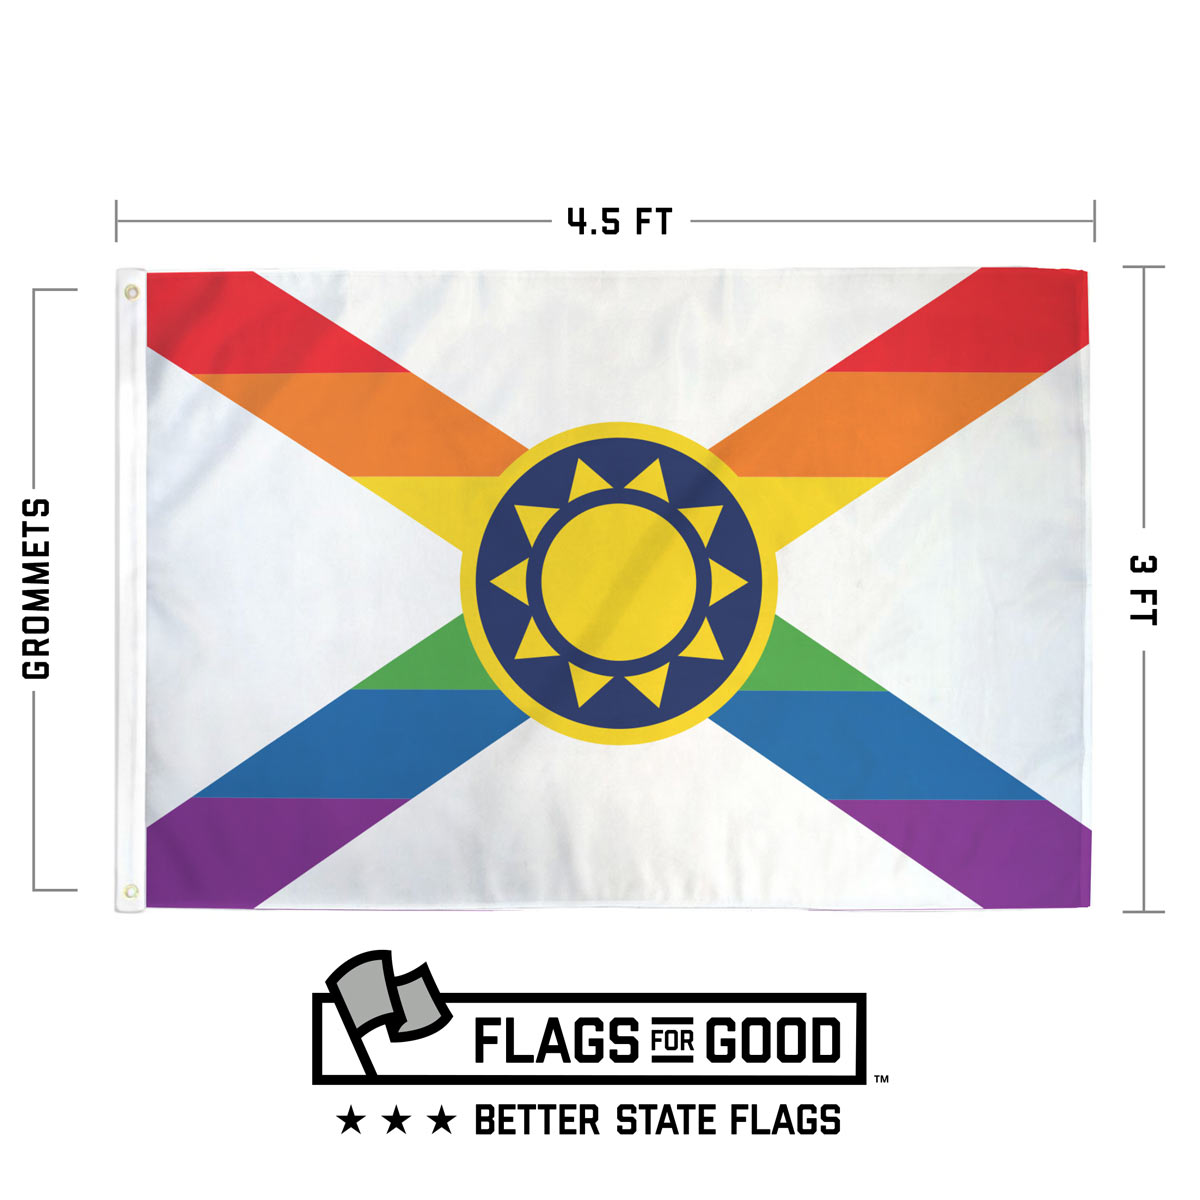 Florida rainbow pride flag measuring 3 by 4.5 feet